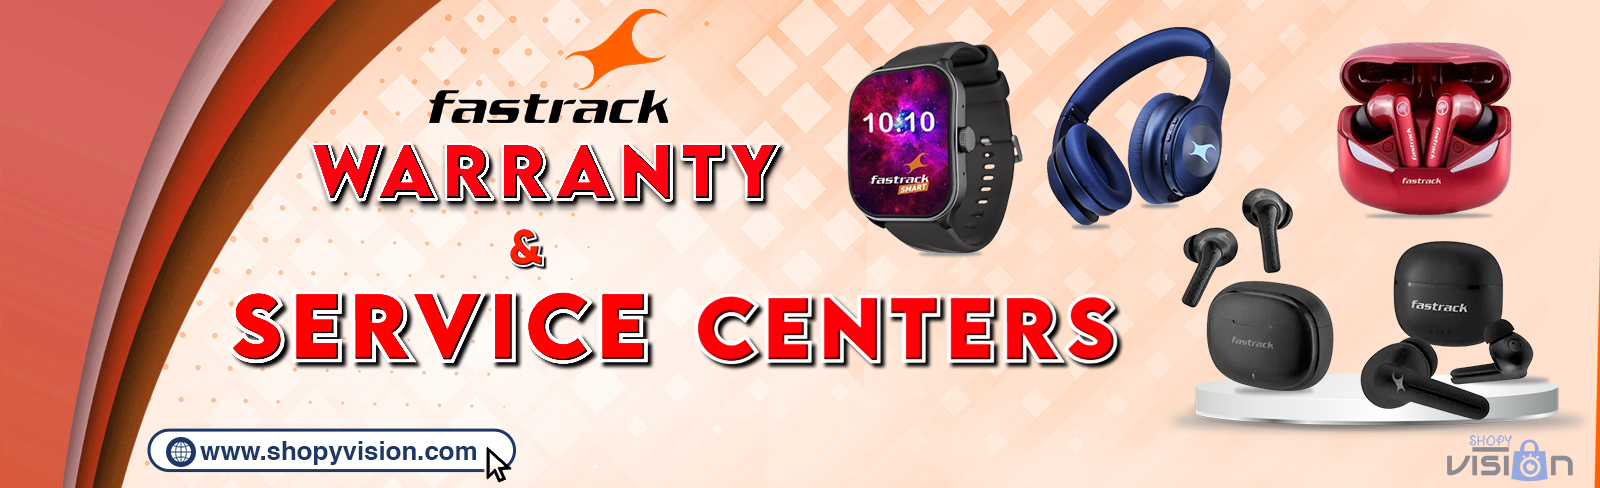 FastTrack Warranty & Service Center In India Desktop Banner